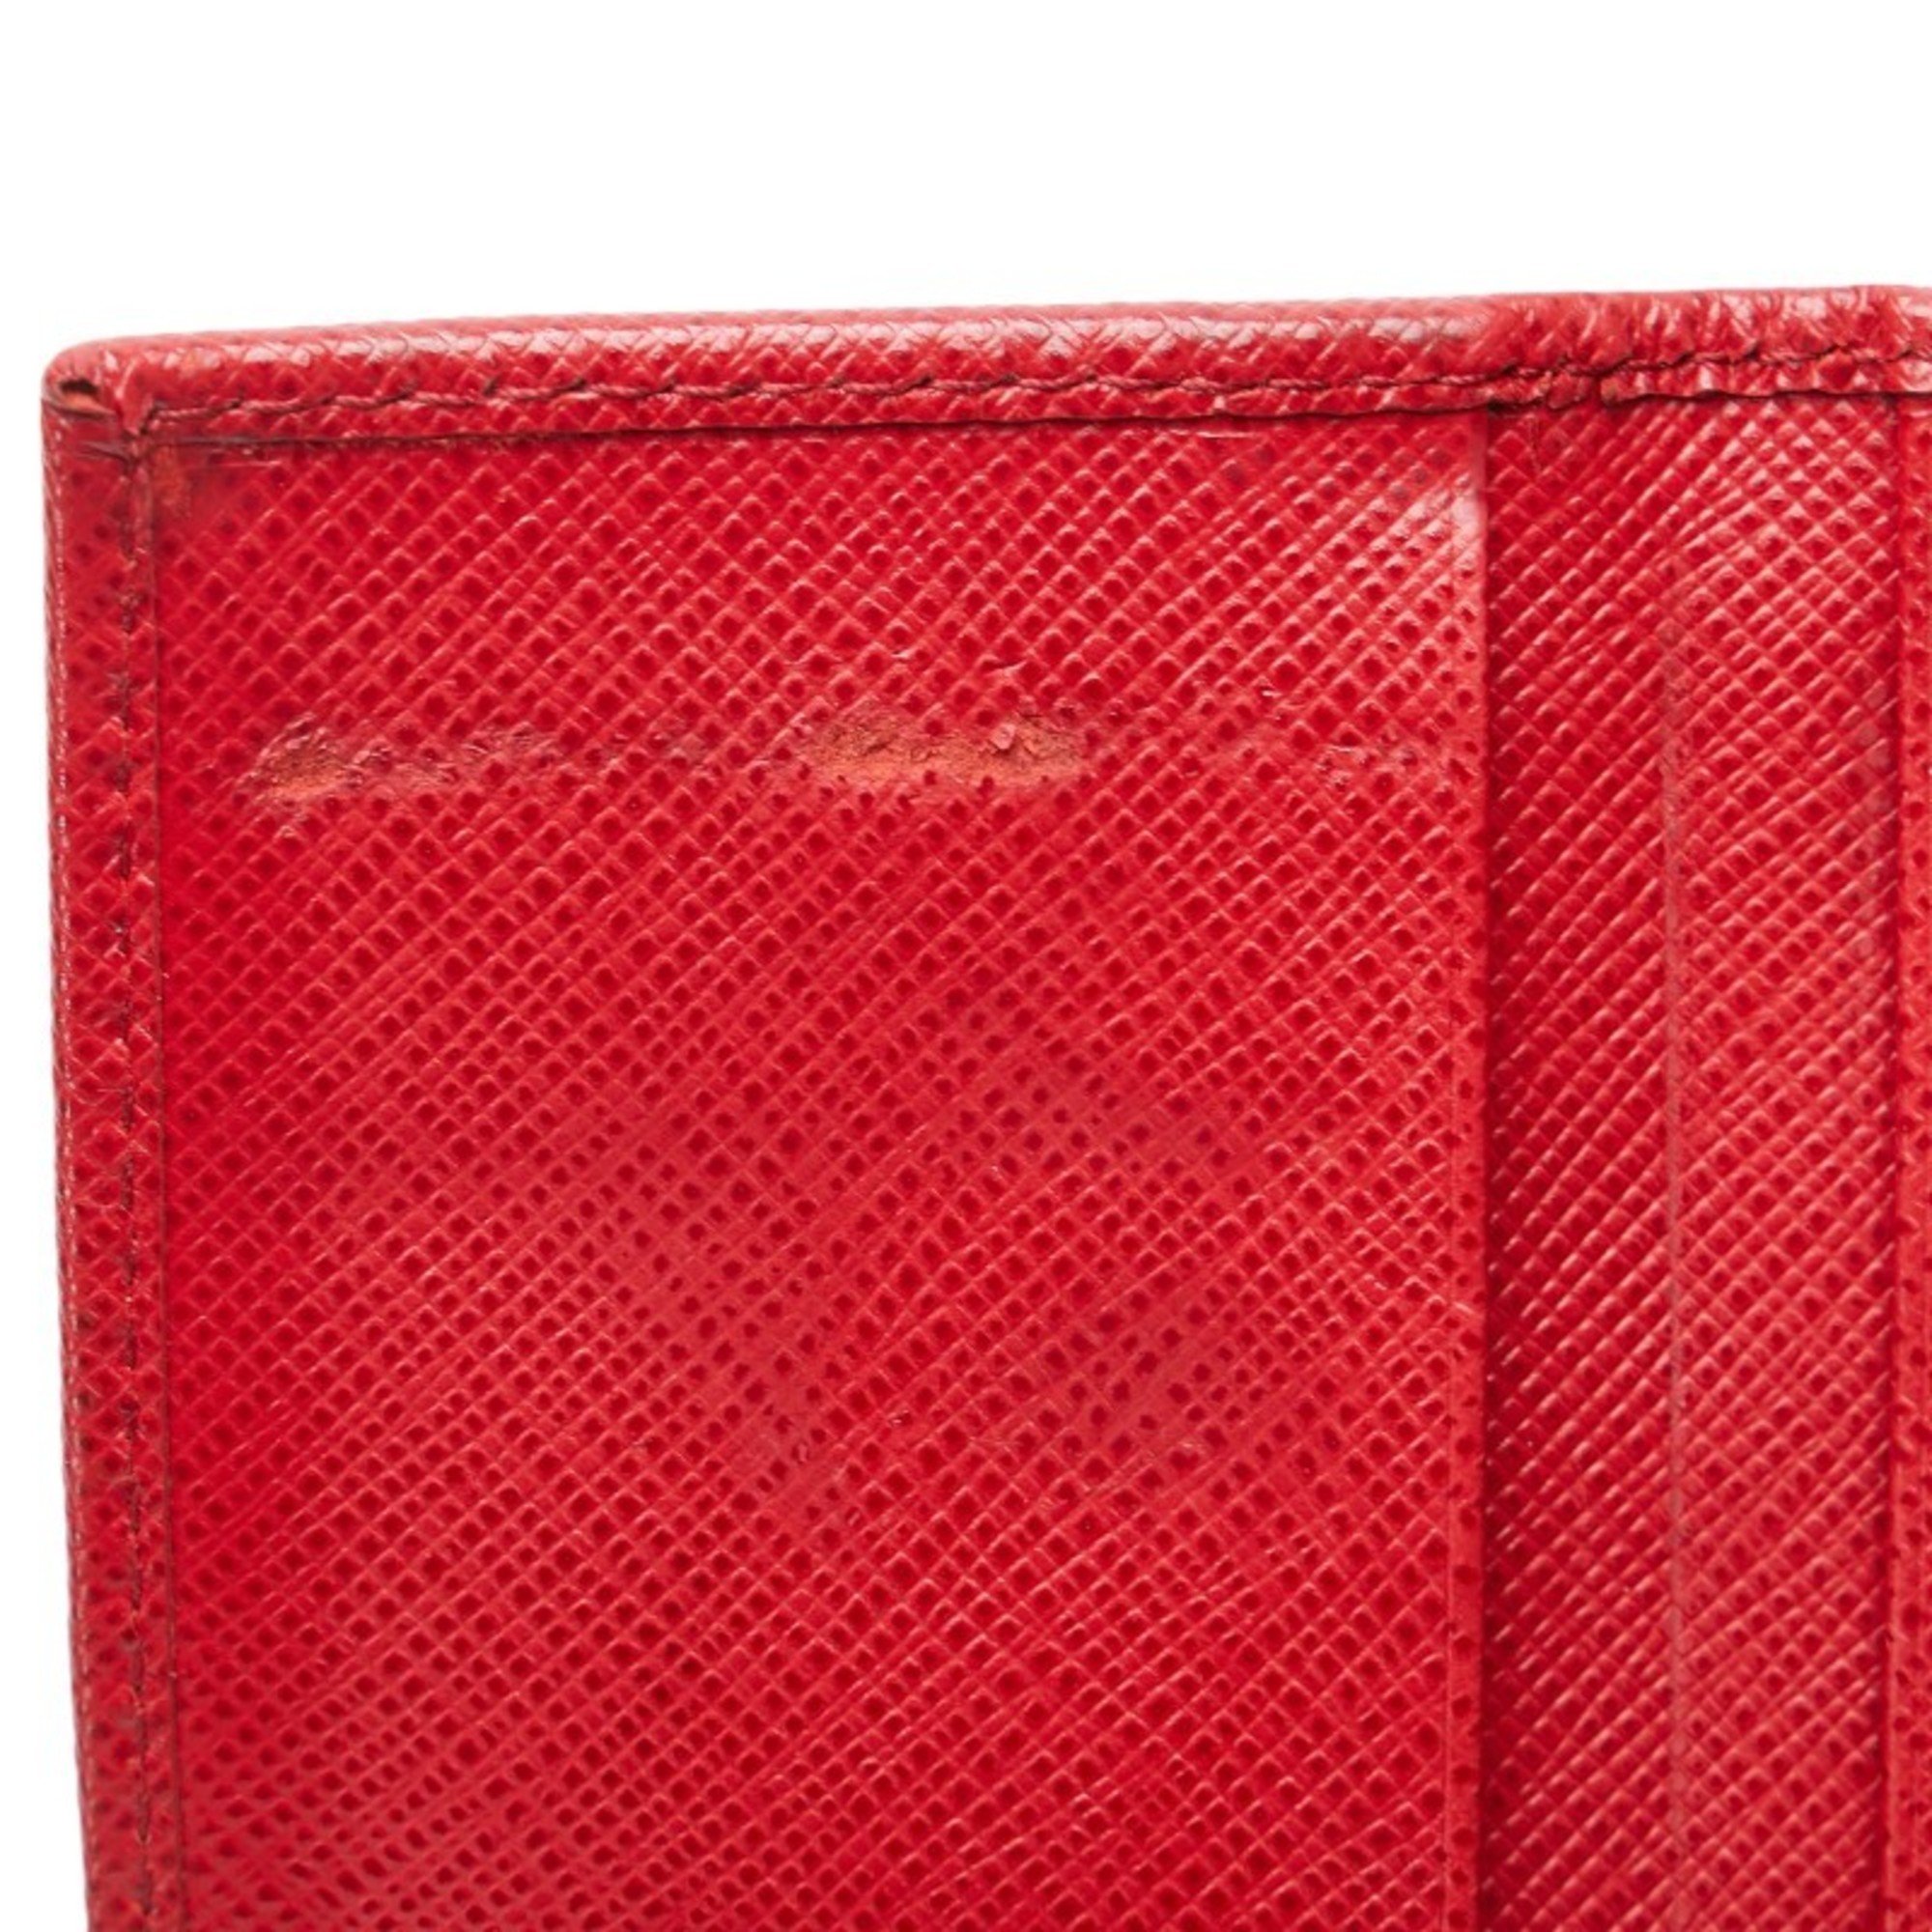 Prada Saffiano 6-ring key case 1PG222 Red leather Women's PRADA